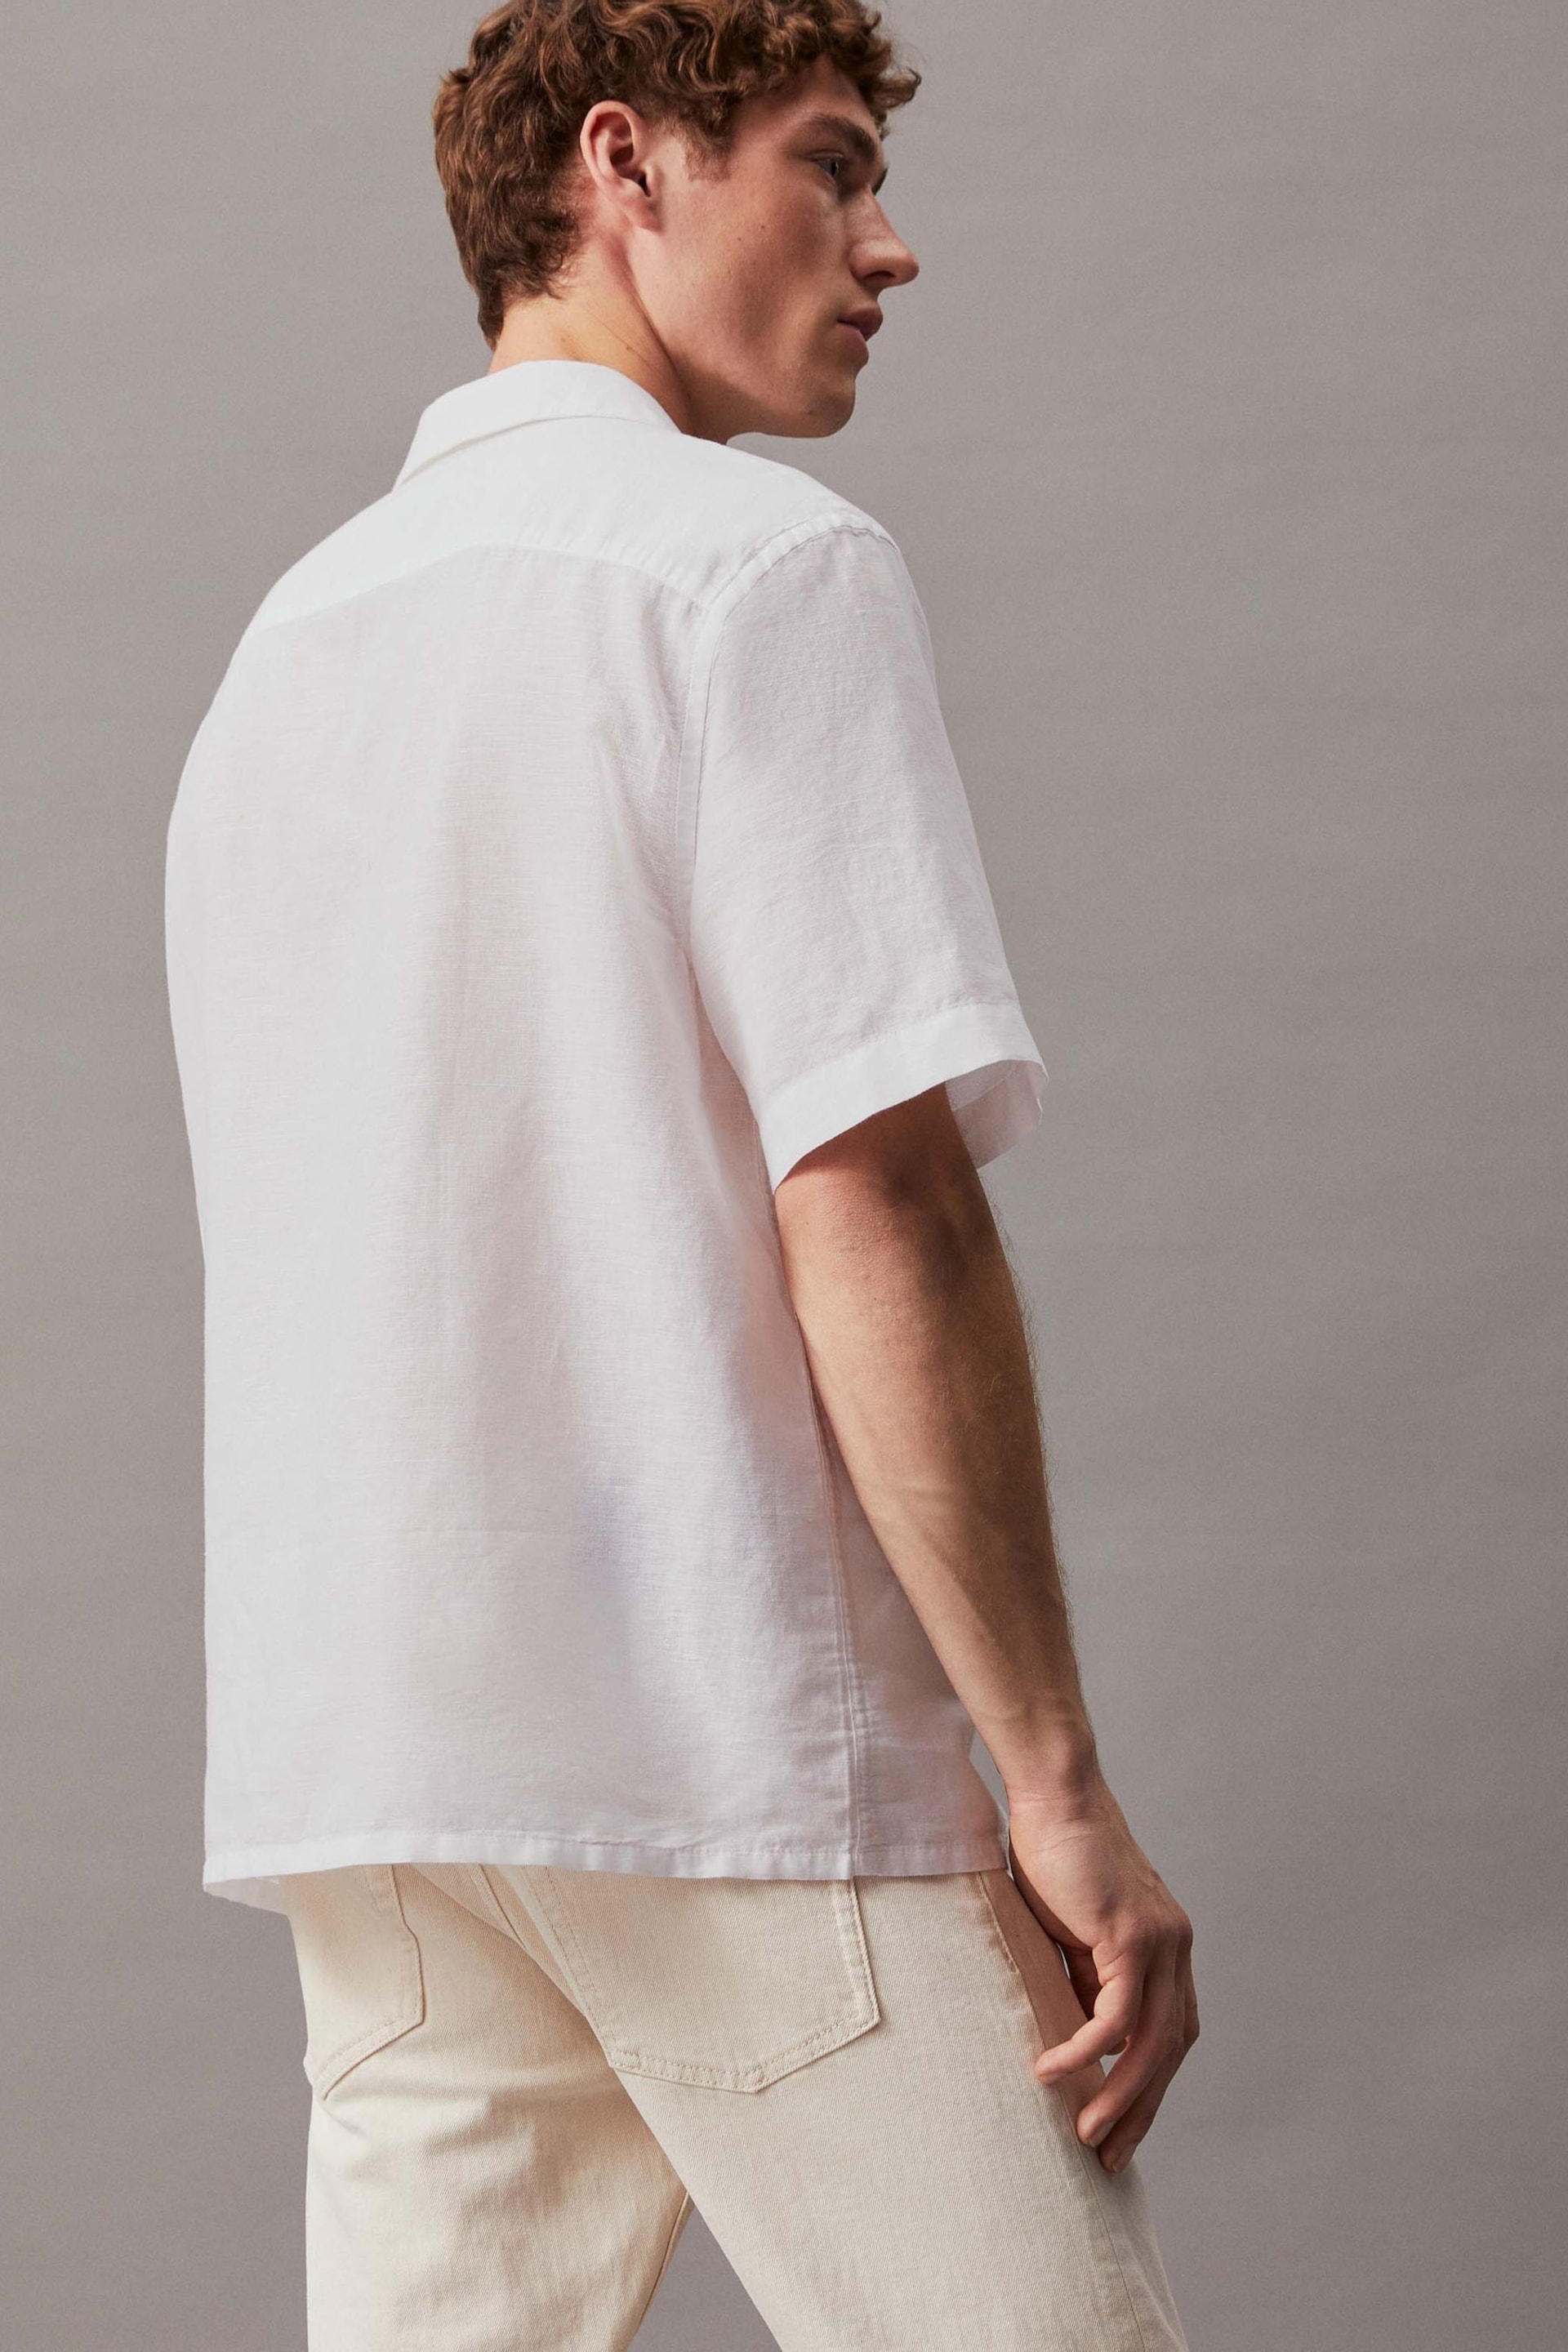 Calvin Klein White Linen Cuban Shirt - Image 2 of 3